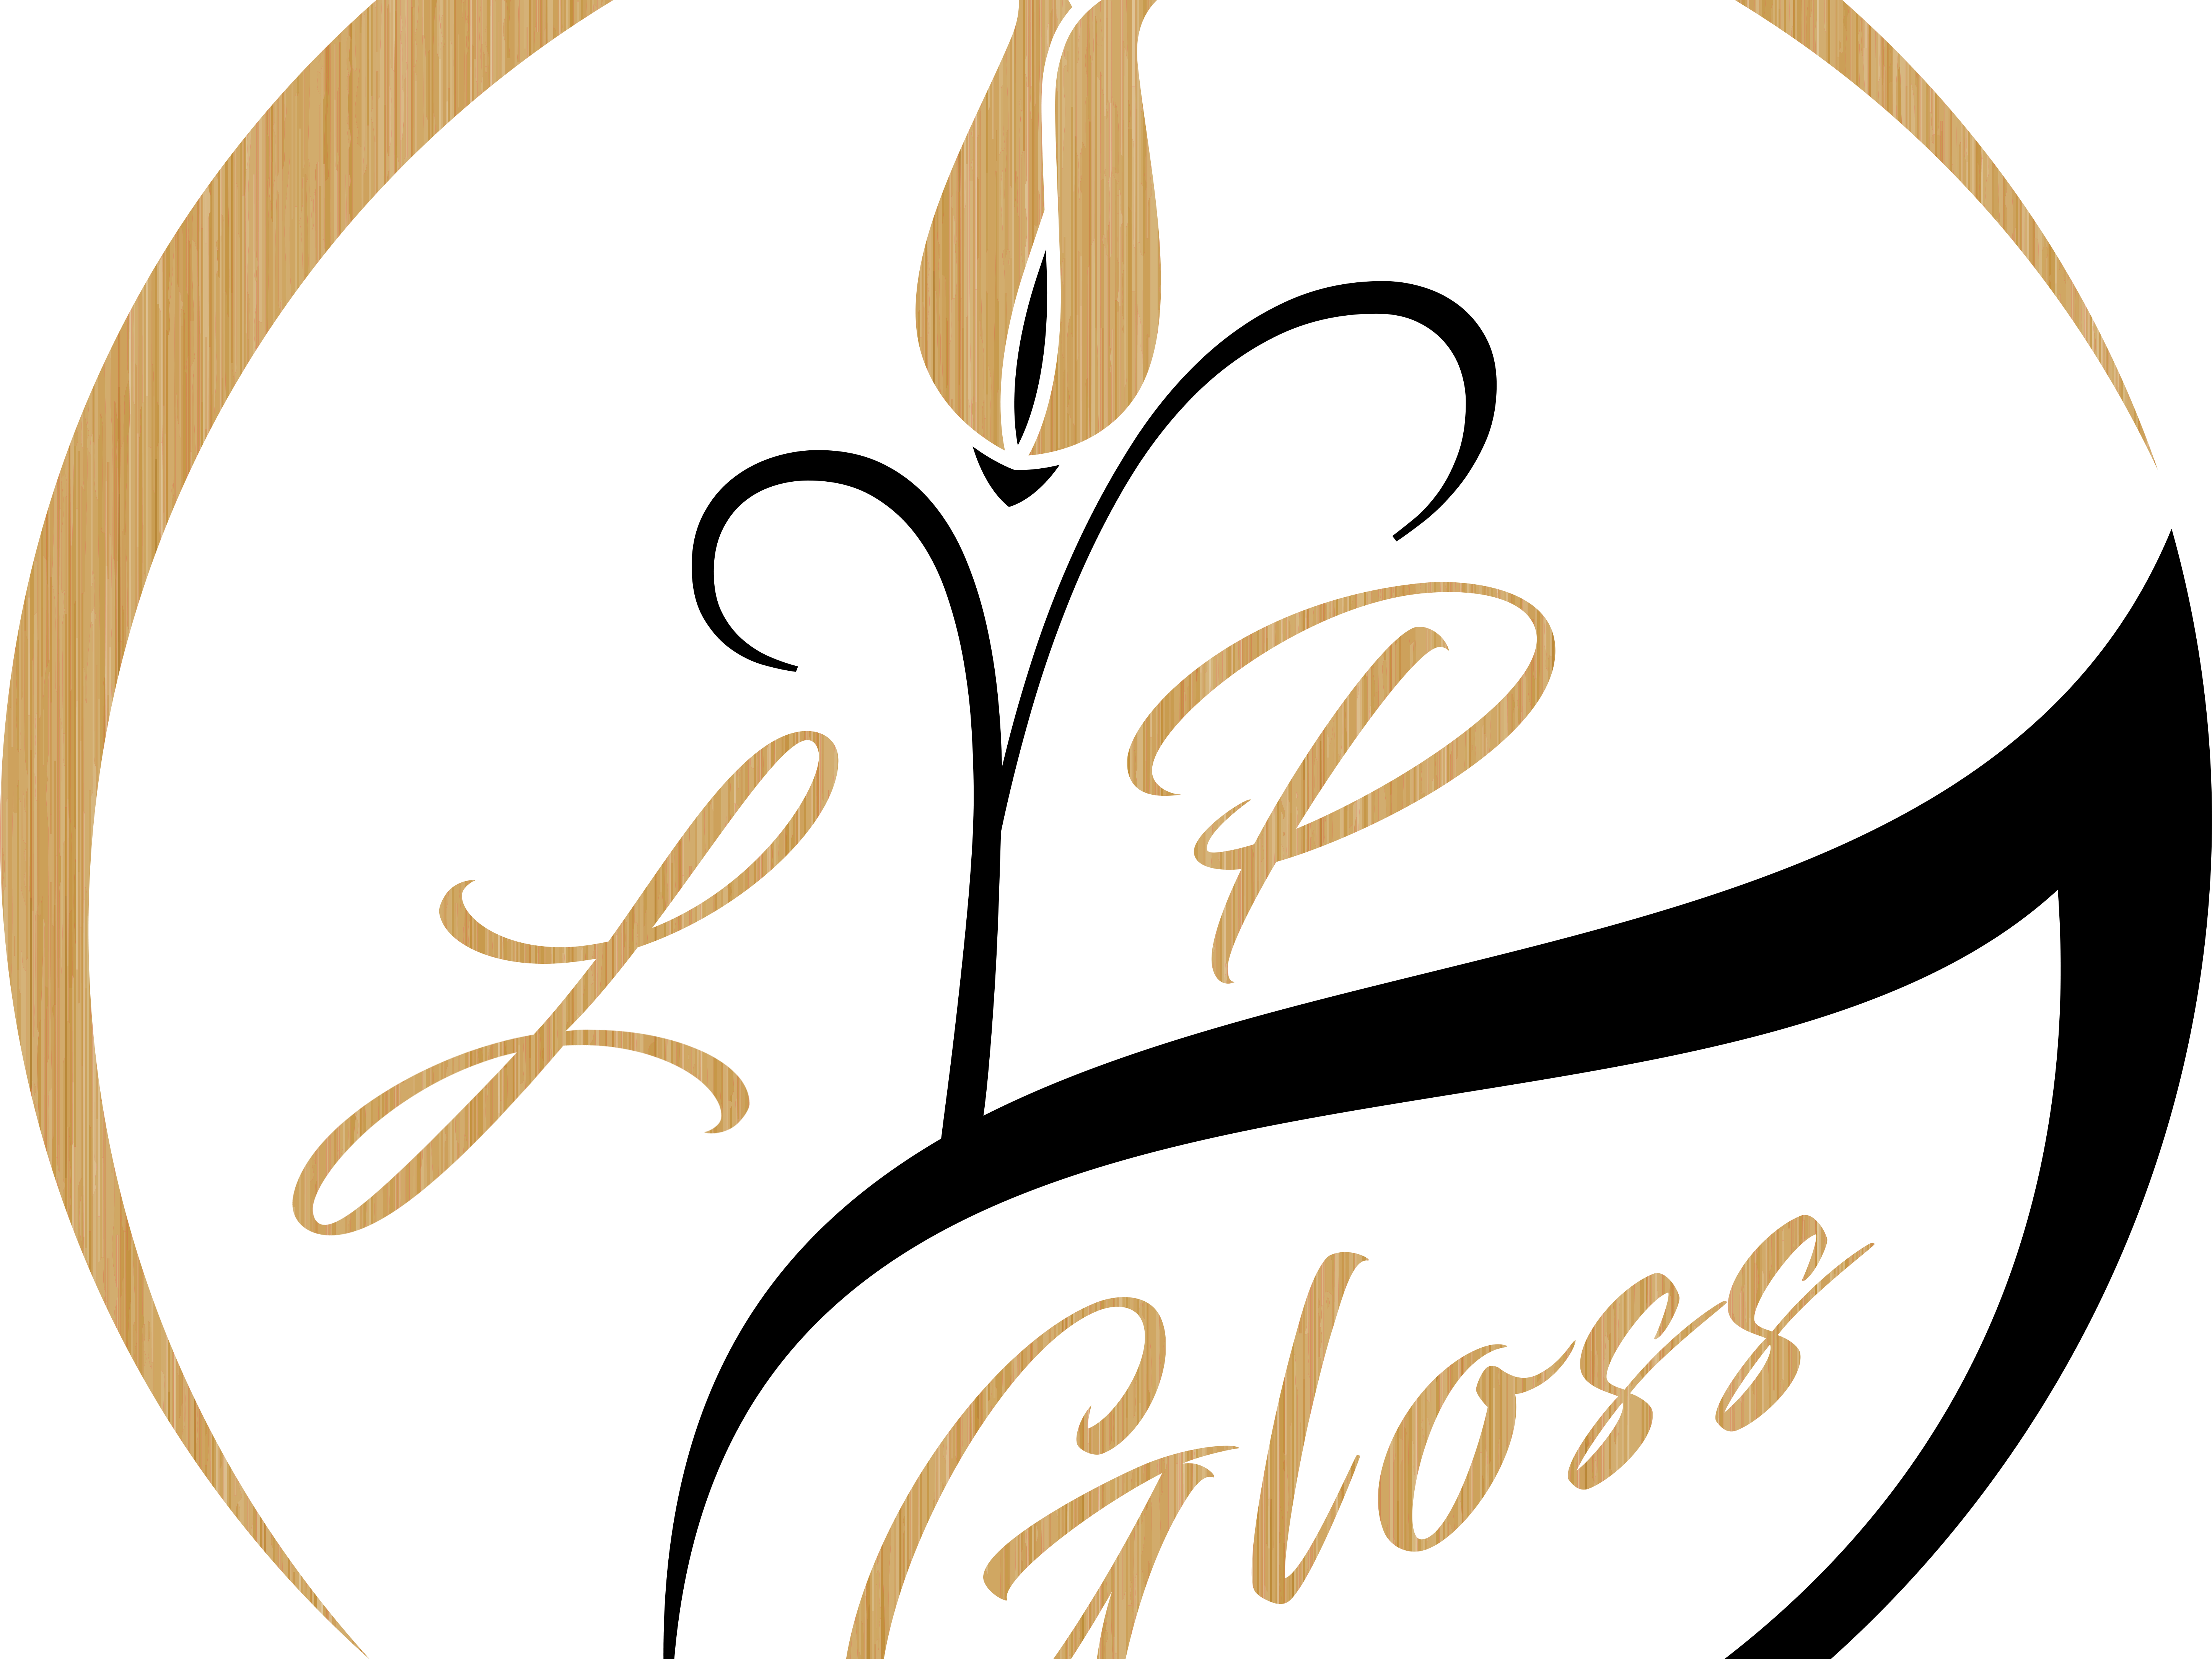 Lyp Gloss Product Development - Project (5782x4336)